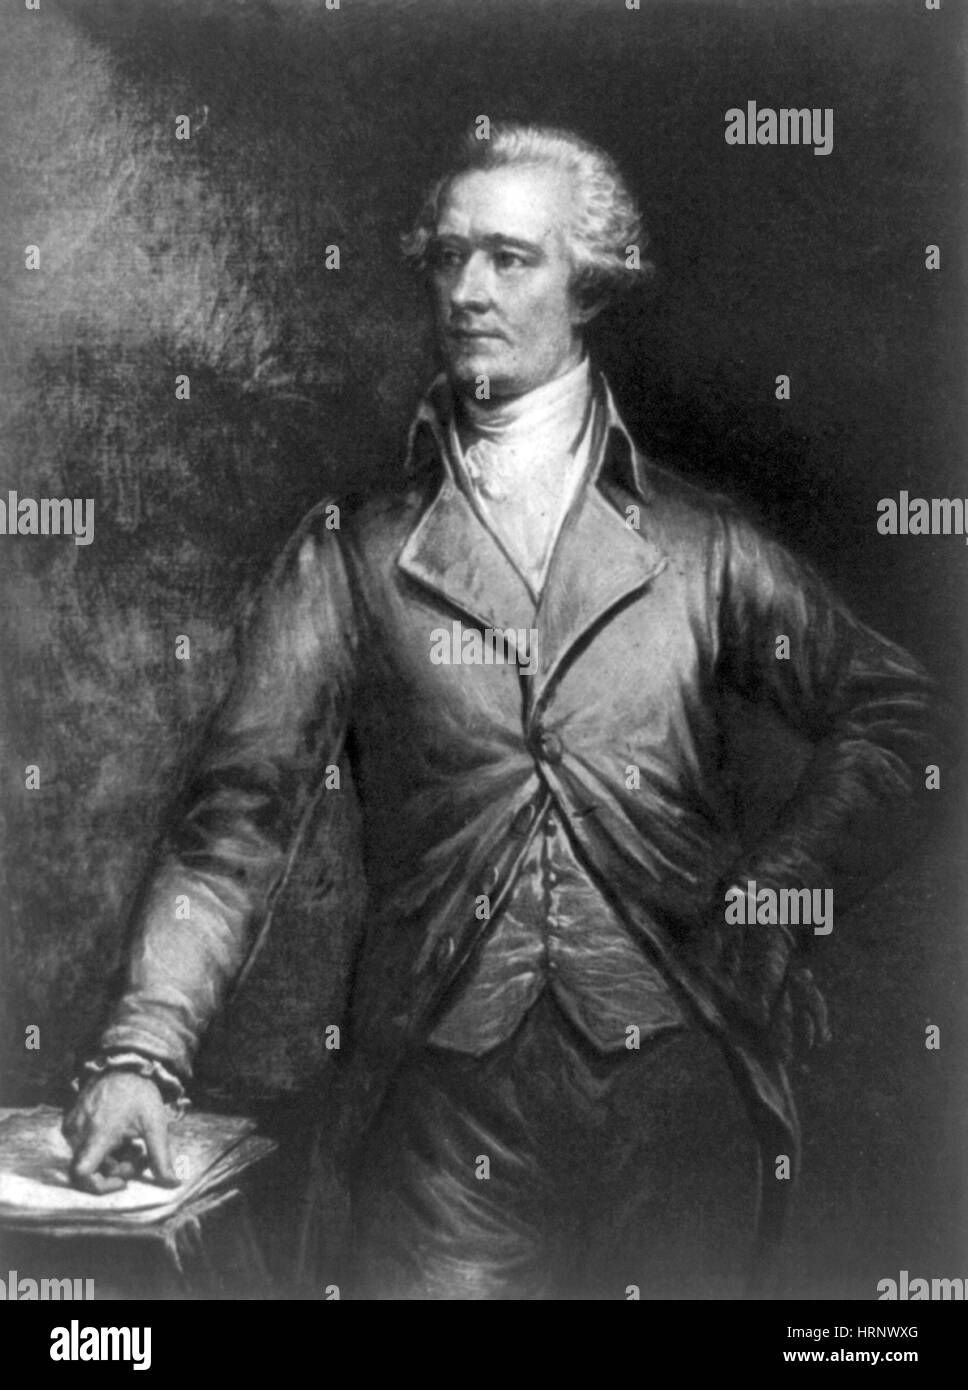 Alexander Hamilton, American Patriot Stock Photo